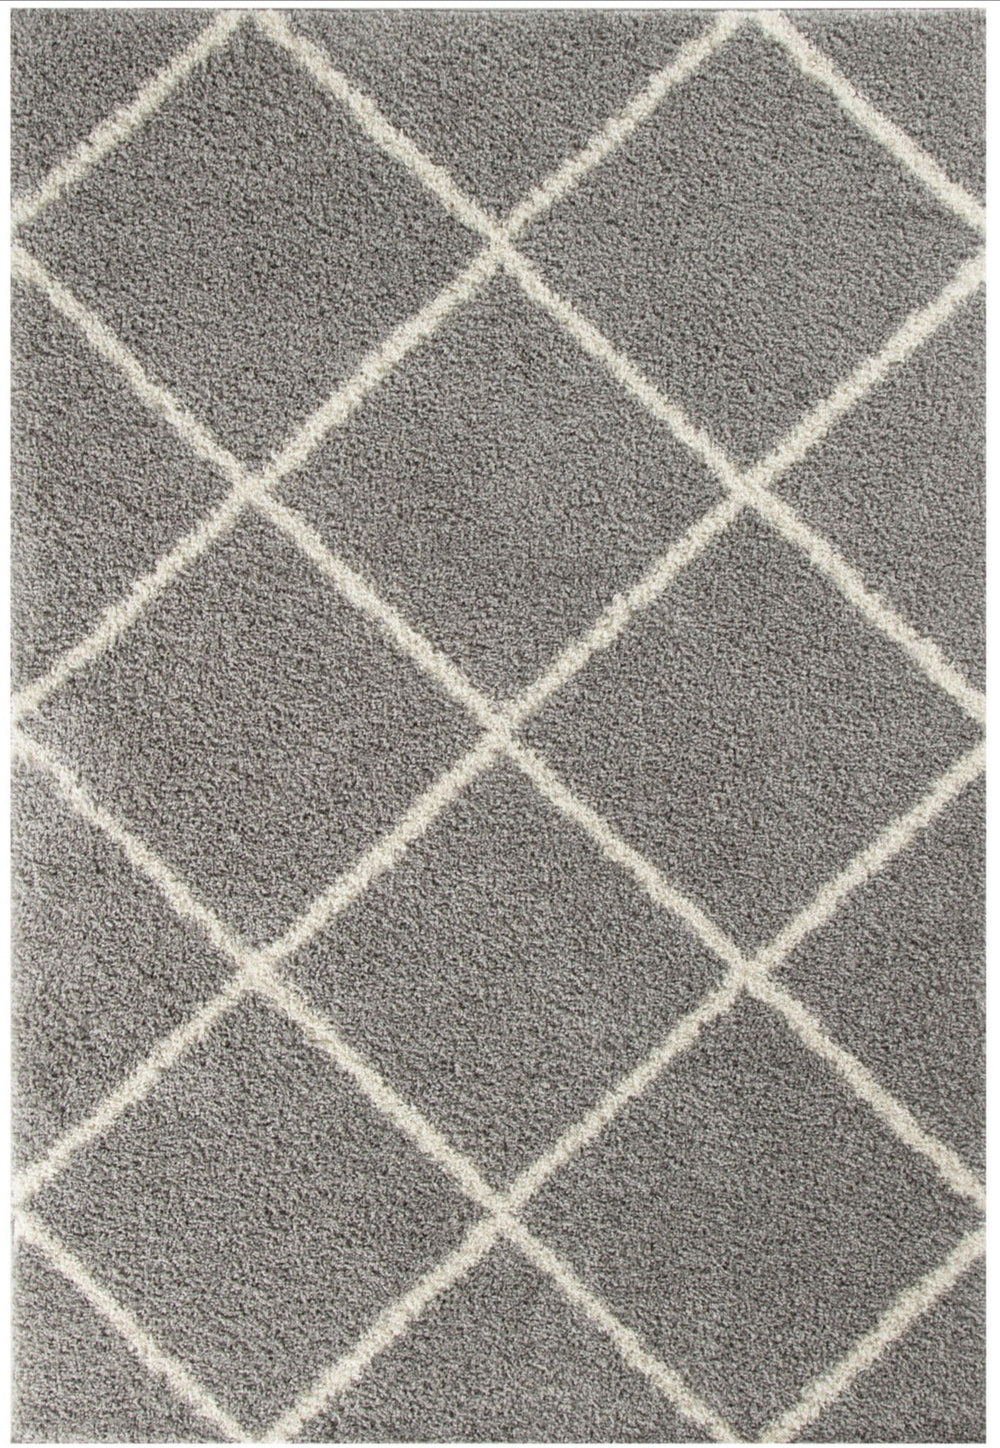 Argyle Round Rugharlequin Floor Carpetrustic Non Slip Circle Rugsdiamond Rubber  Backing Matfloral Area Rugsblack Rug for Living Room 